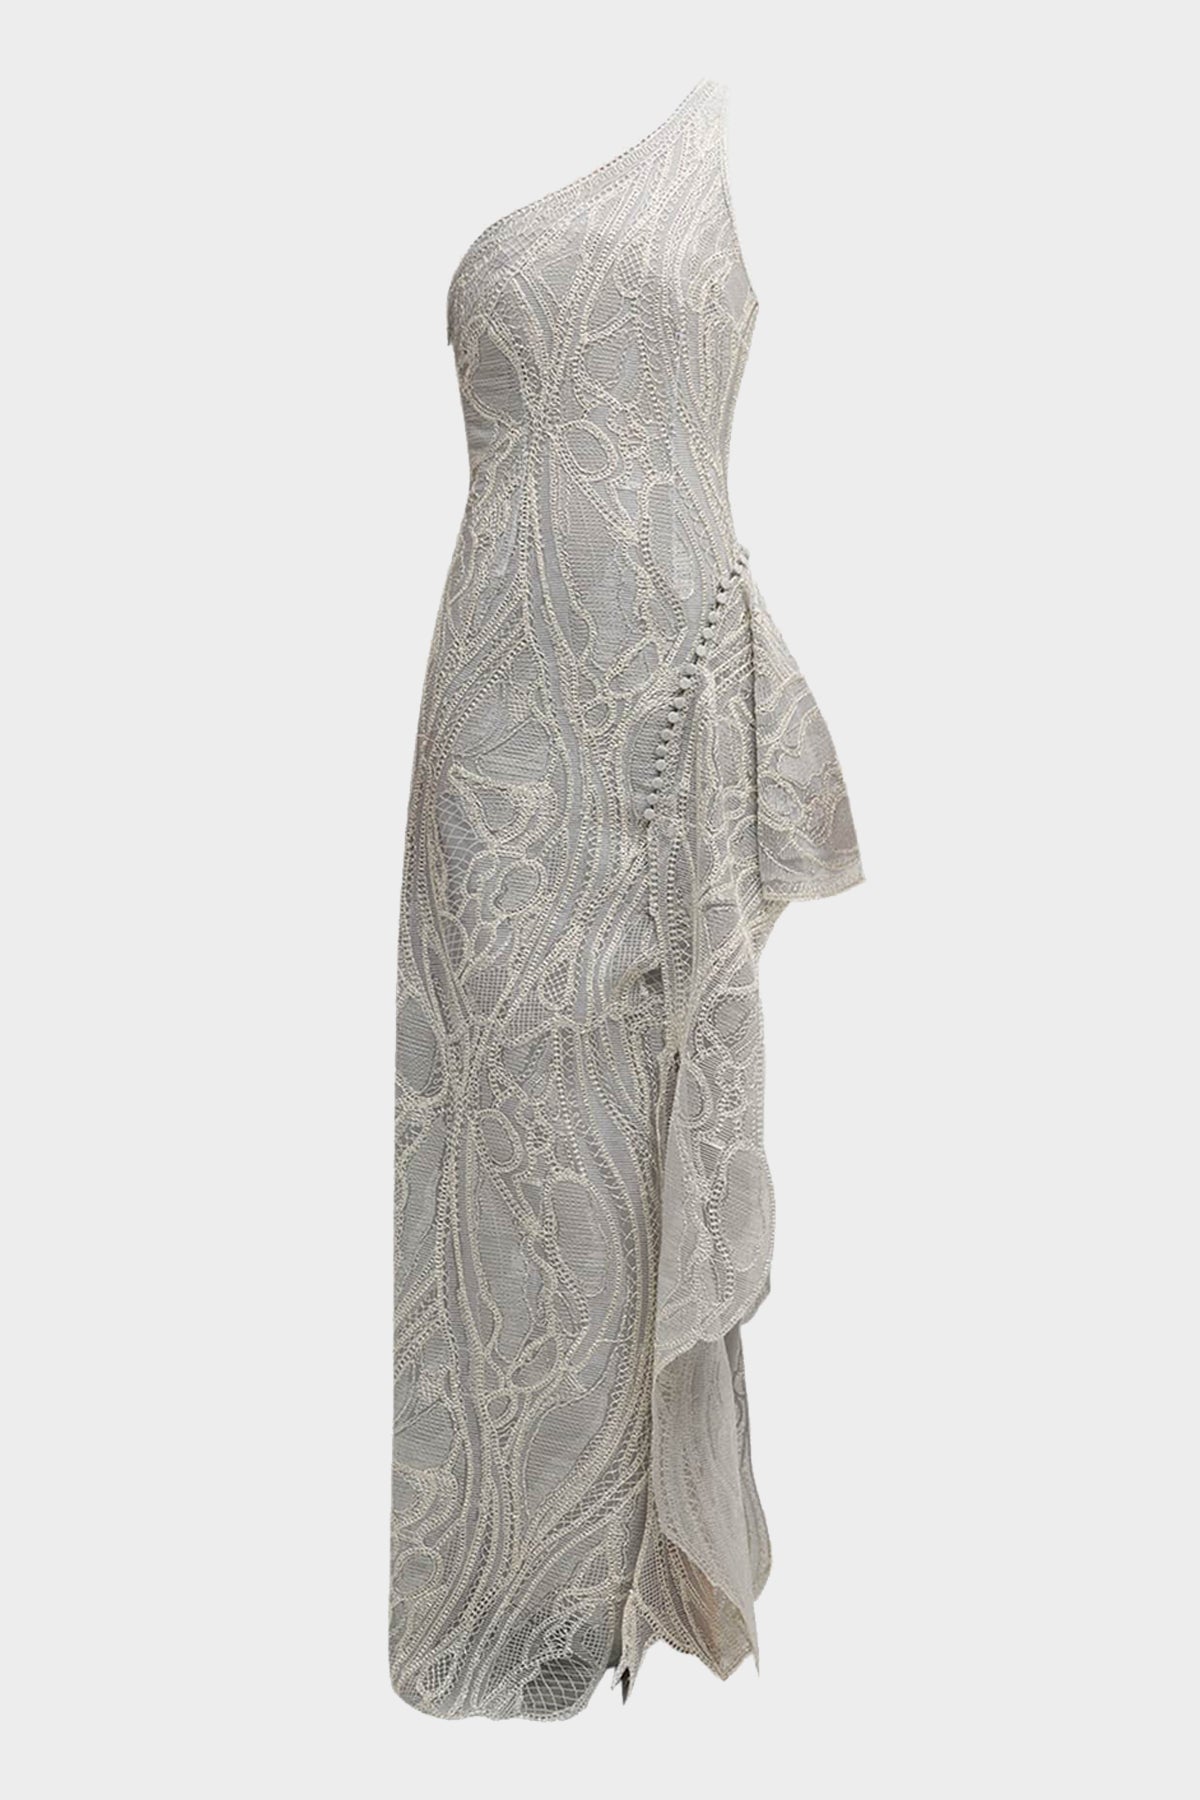 Agatha Gown in Silver - shop-olivia.com